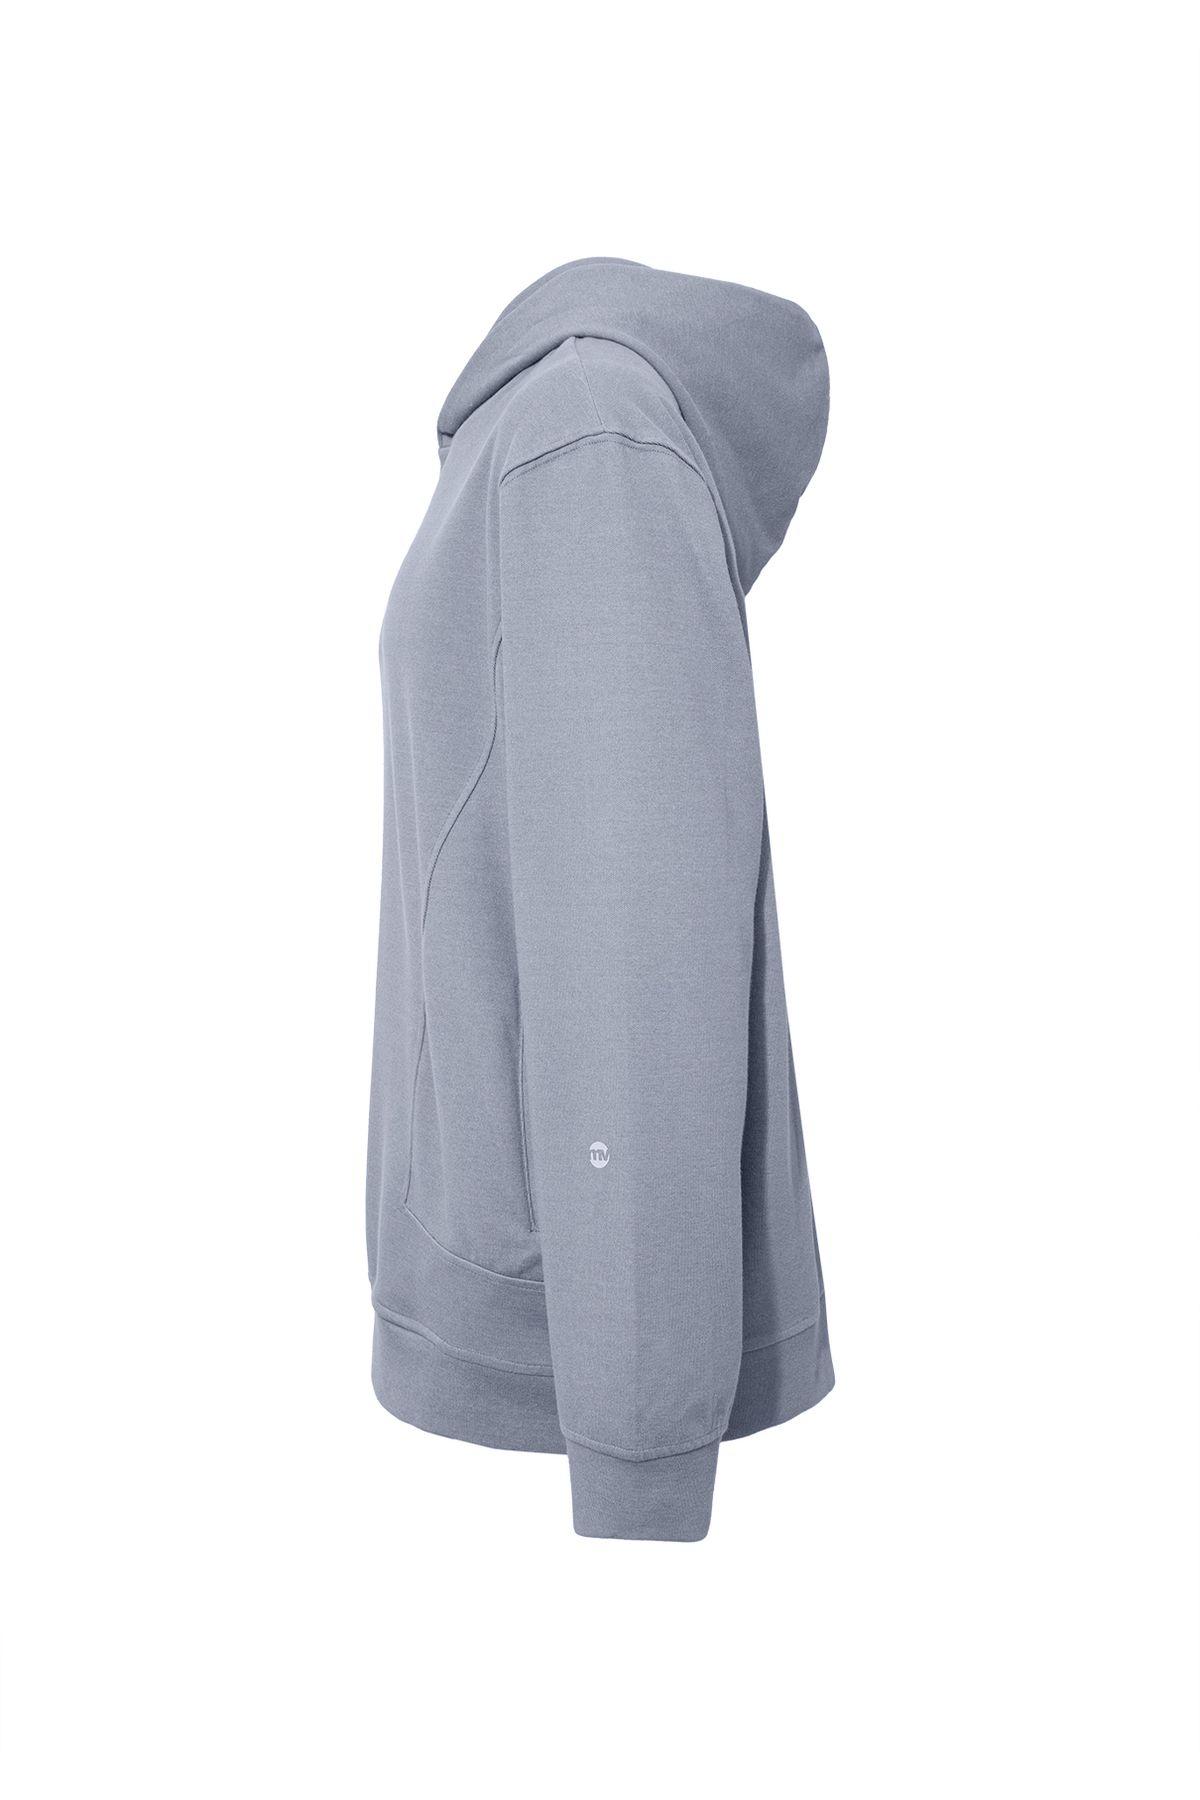 Mavi پیراهن ورزشی خاکستری با لباس 0810023-80020